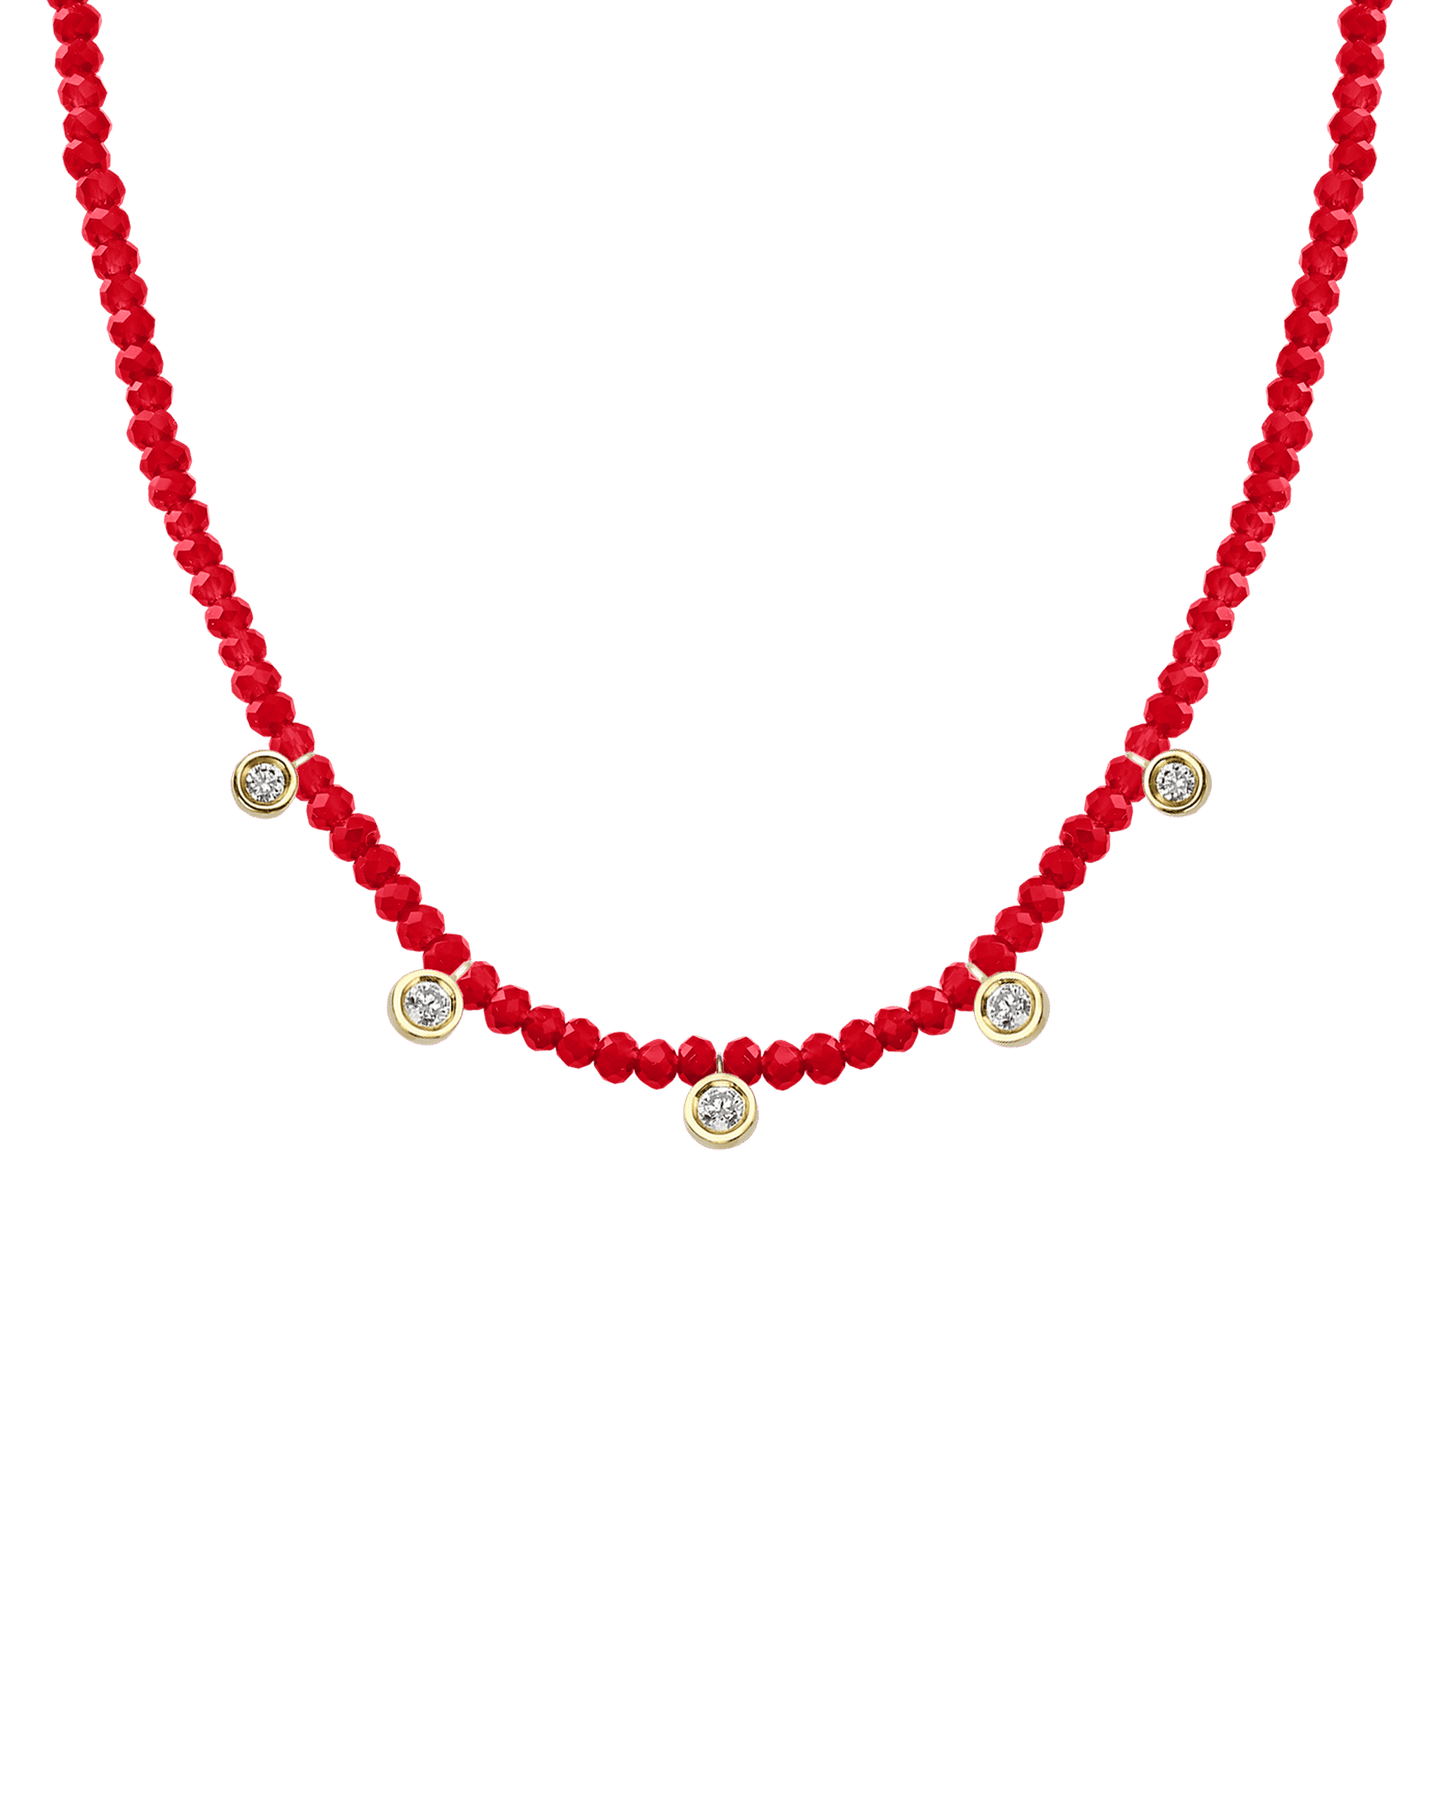 Apatite Gemstone & Five diamonds Necklace - 14K White Gold